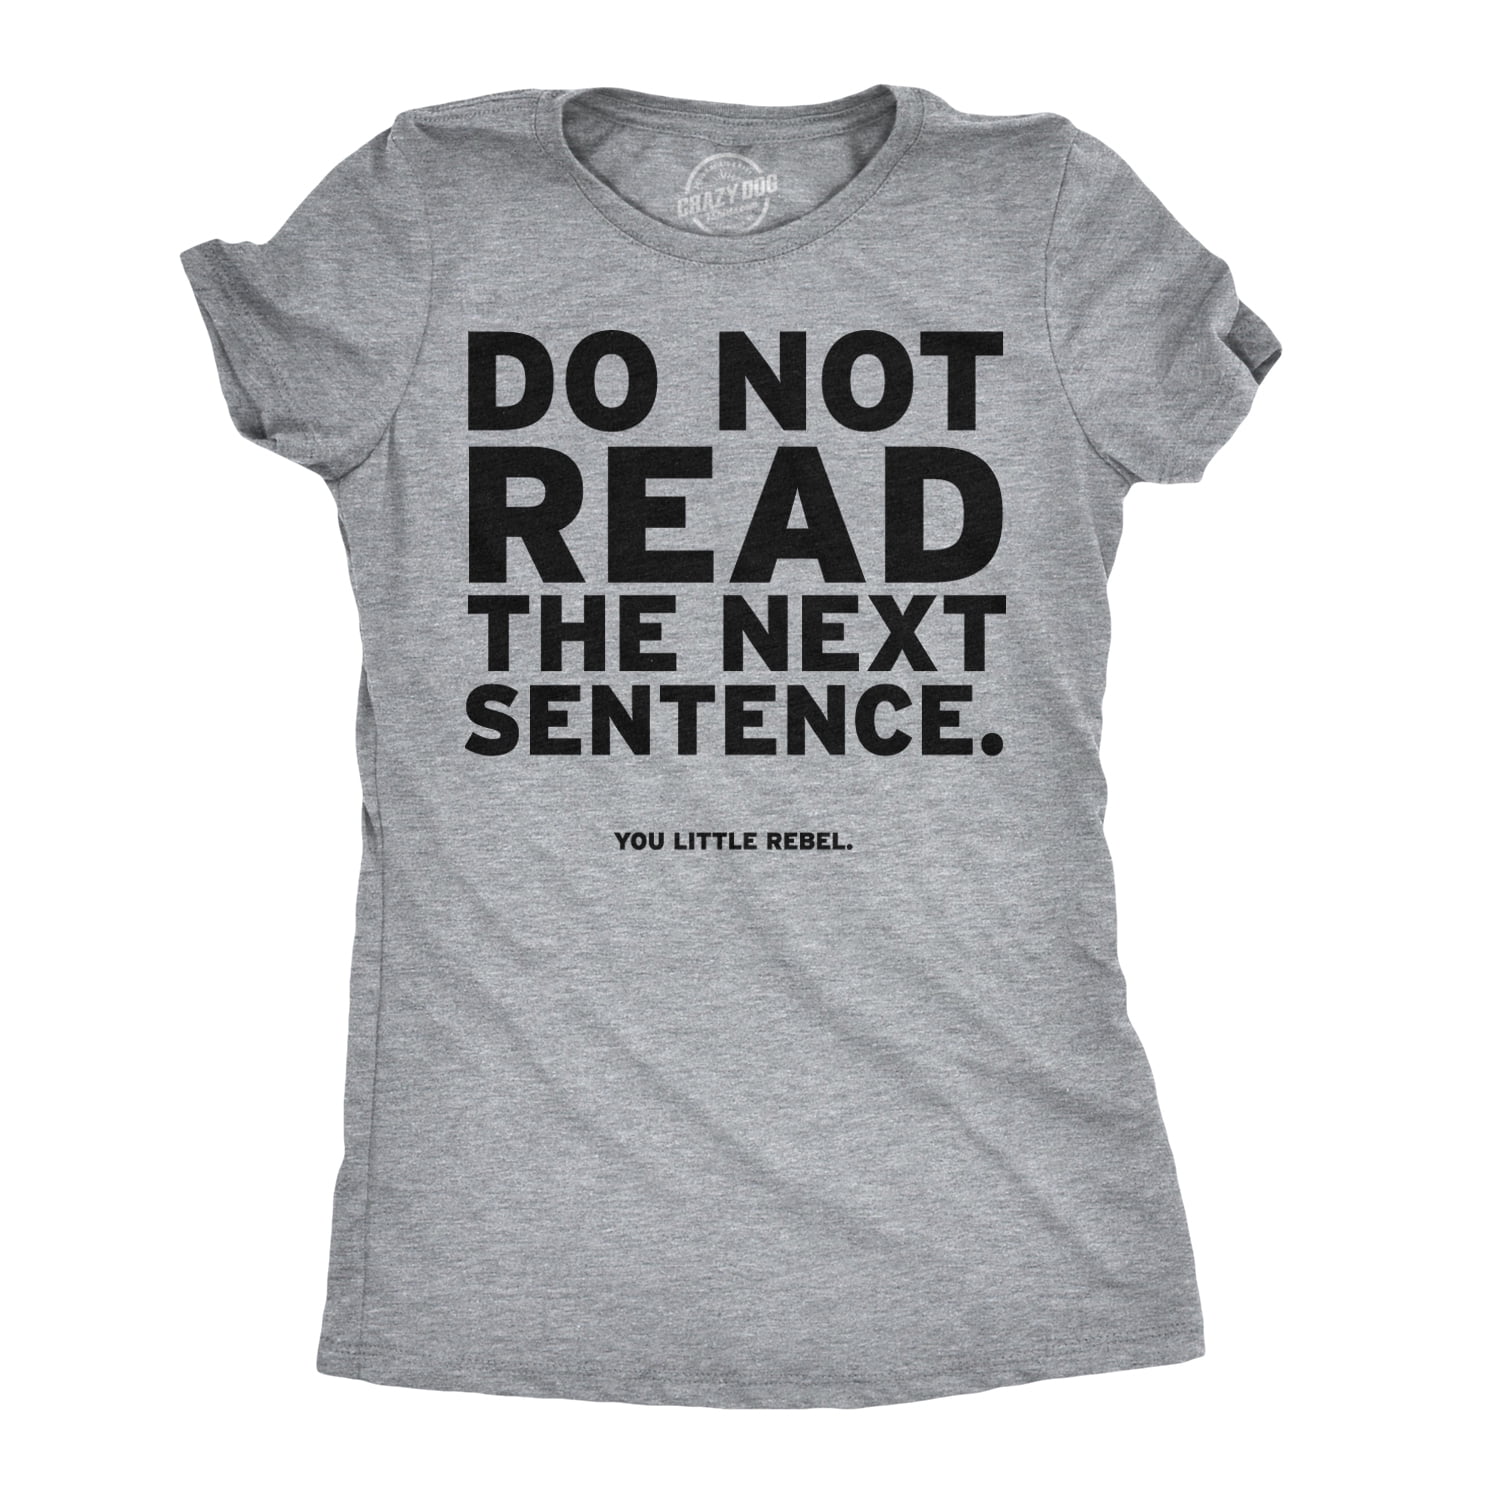 Crazy Dog TShirts Women's Do Not Read The Next Sentence T Shirt